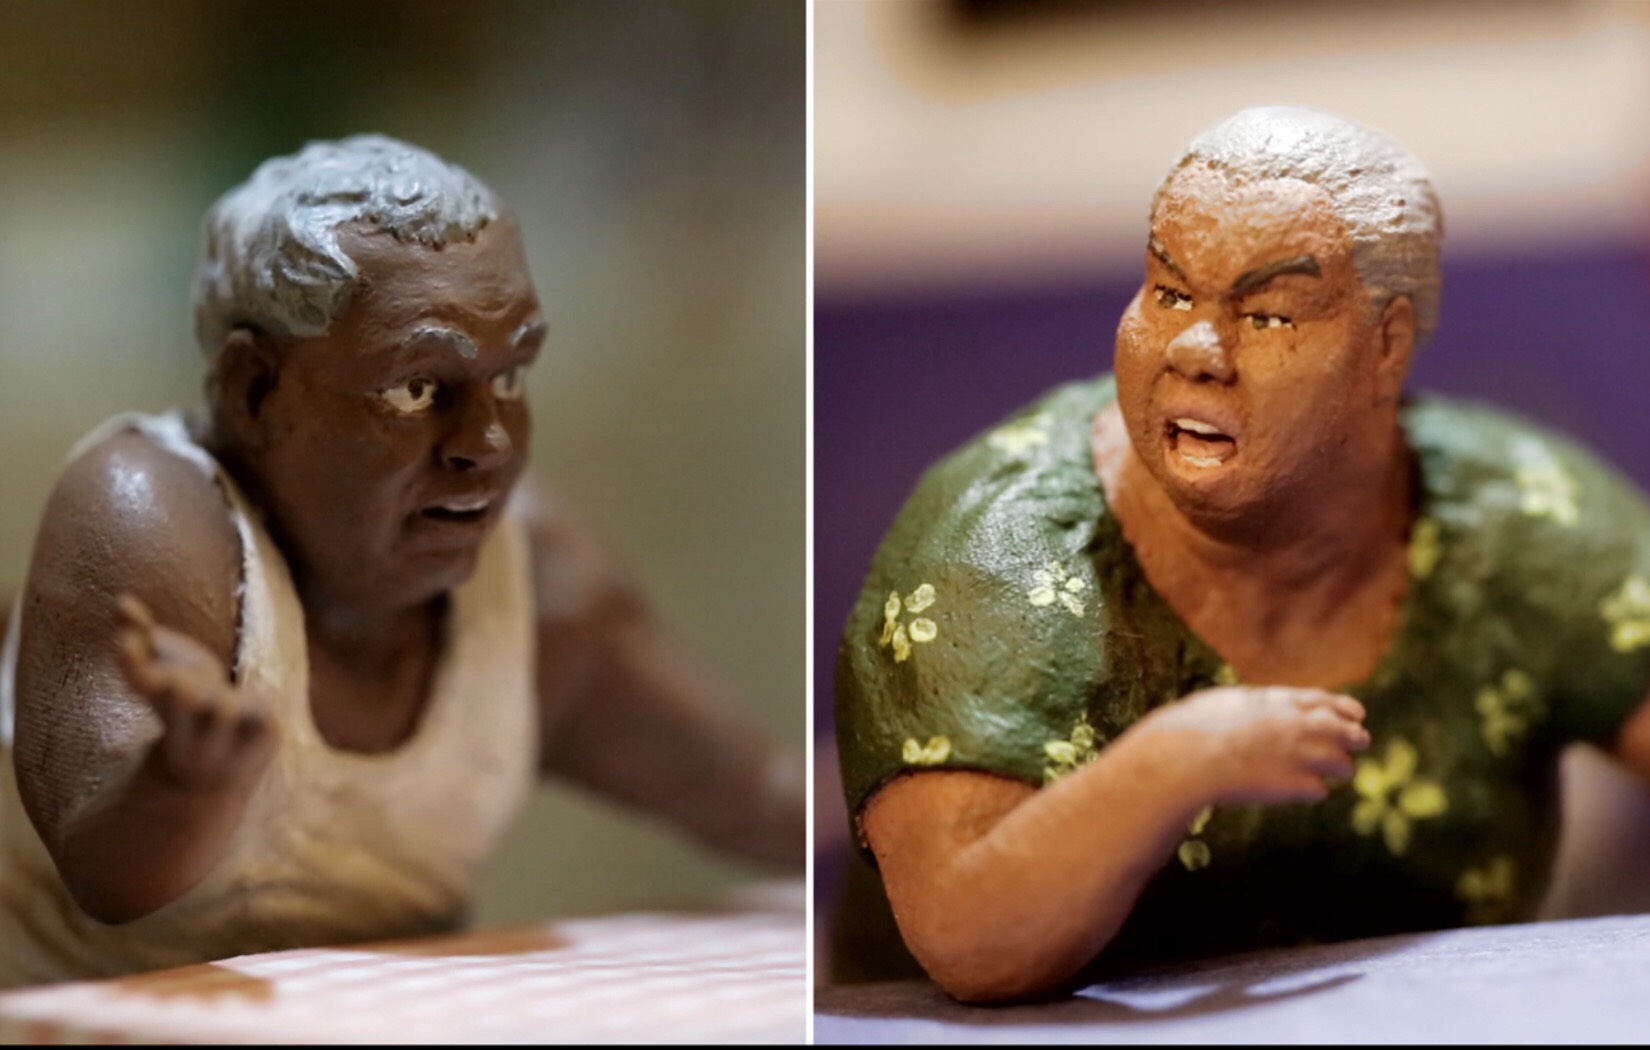 W. Caballero, 3D printed figurines